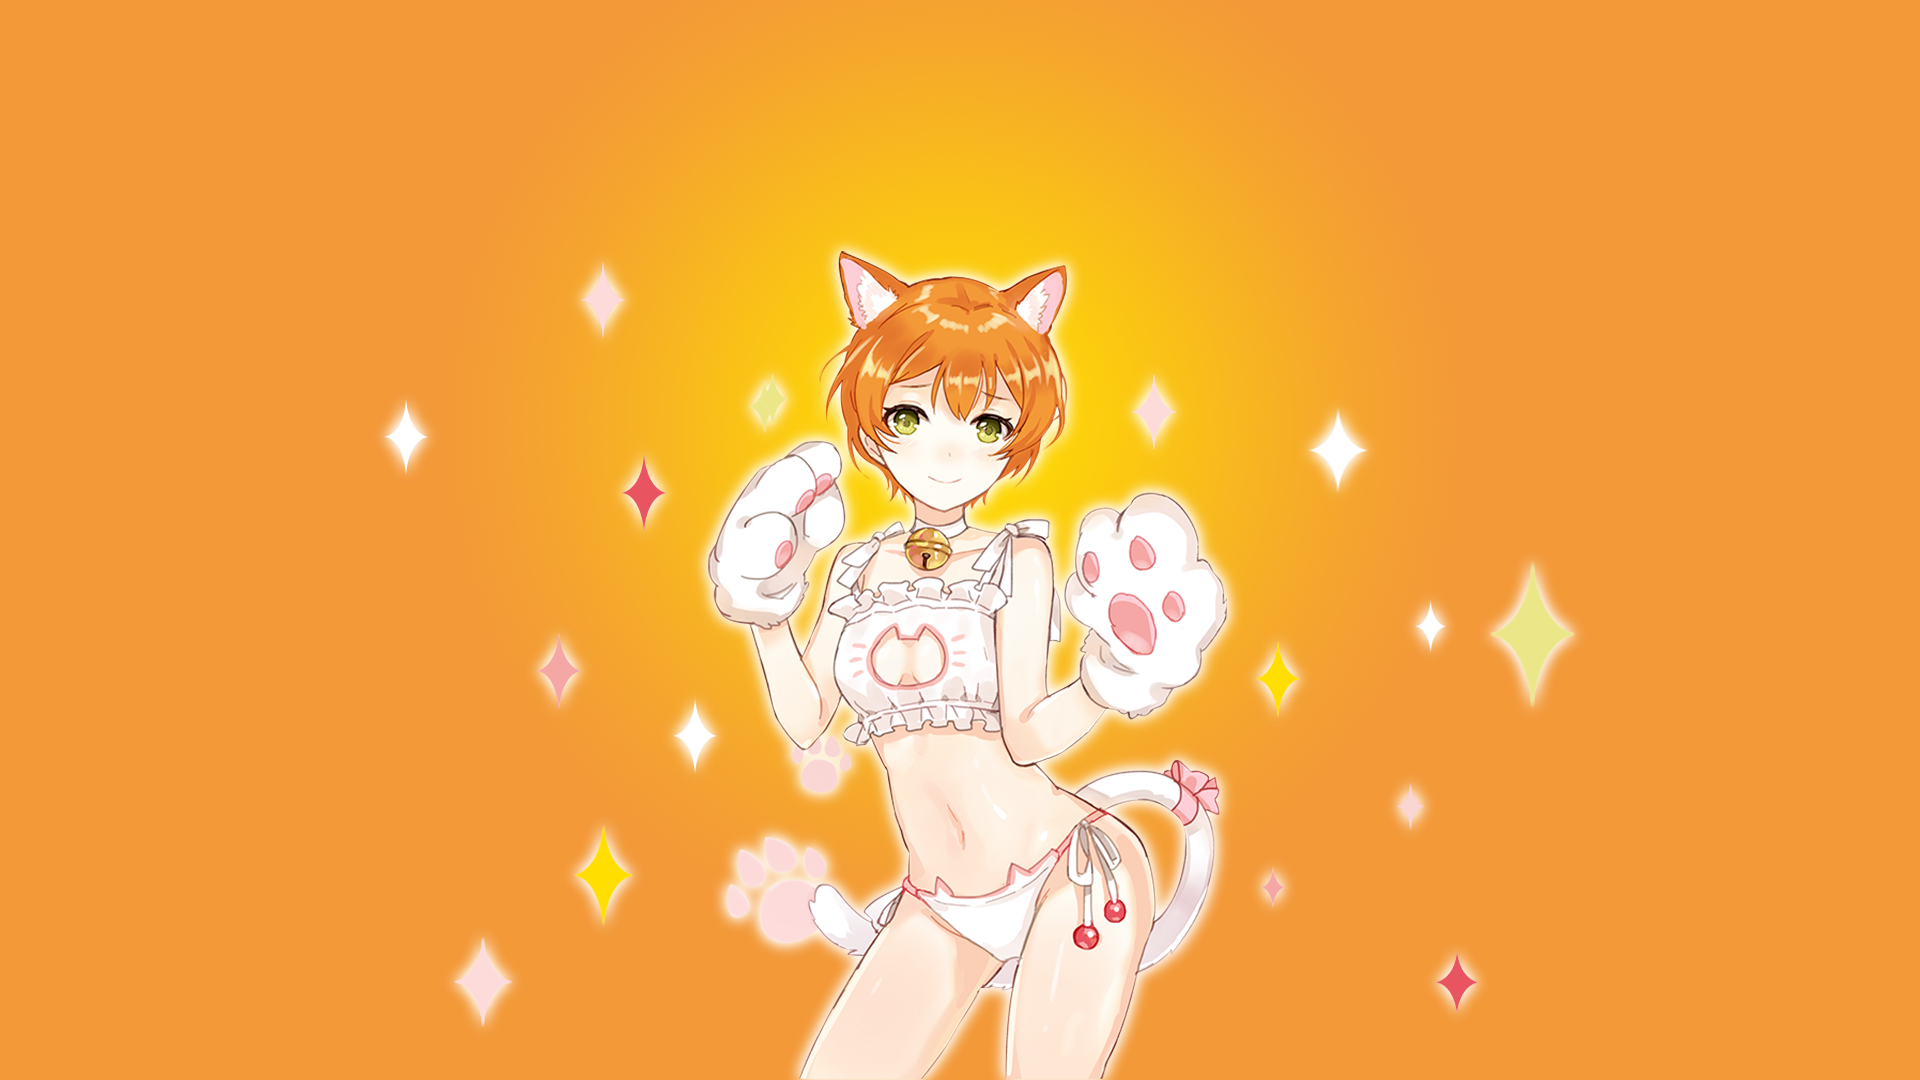 Anime 1920x1080 anime anime girls Love Live! cat girl Hoshizora Rin cat keyhole bra orange background simple background gradient bra panties animal ears tail smiling green eyes